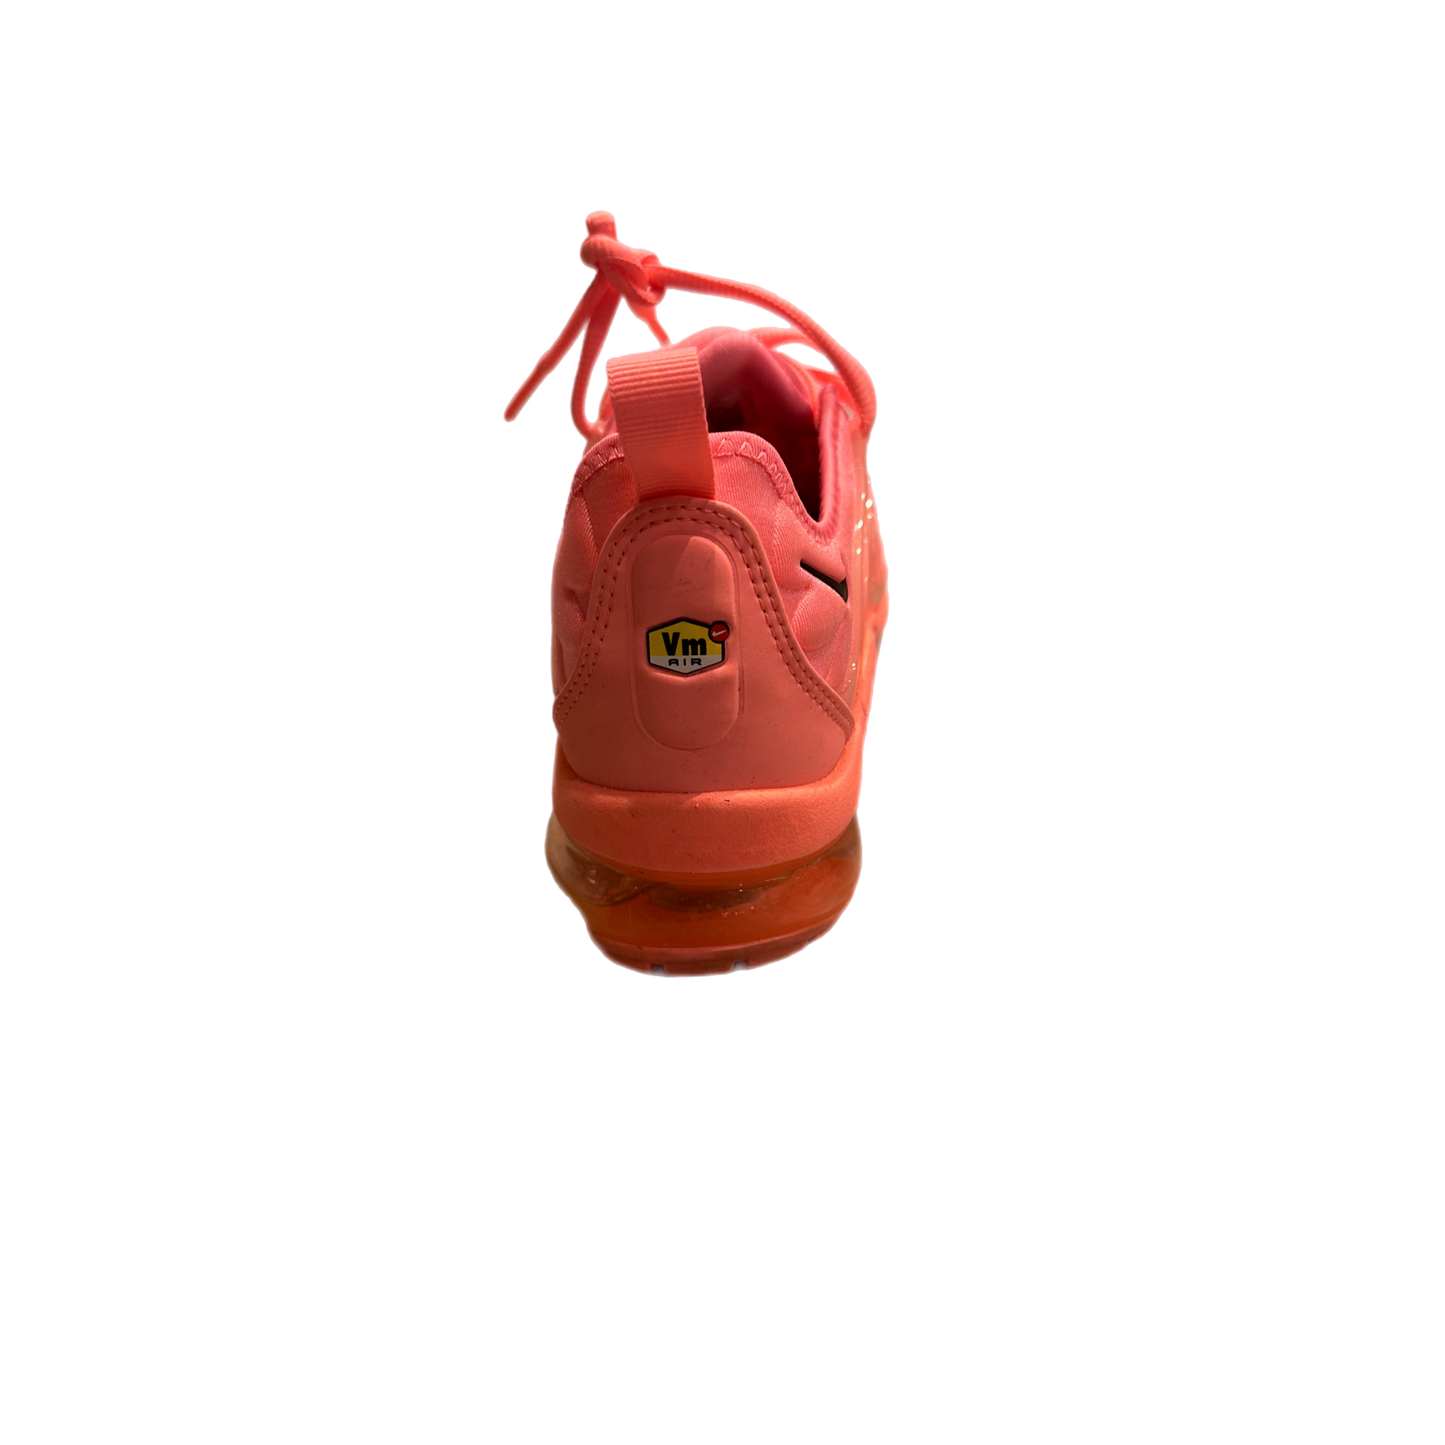 Nike - "Vapormax Pink" - Size 6.5